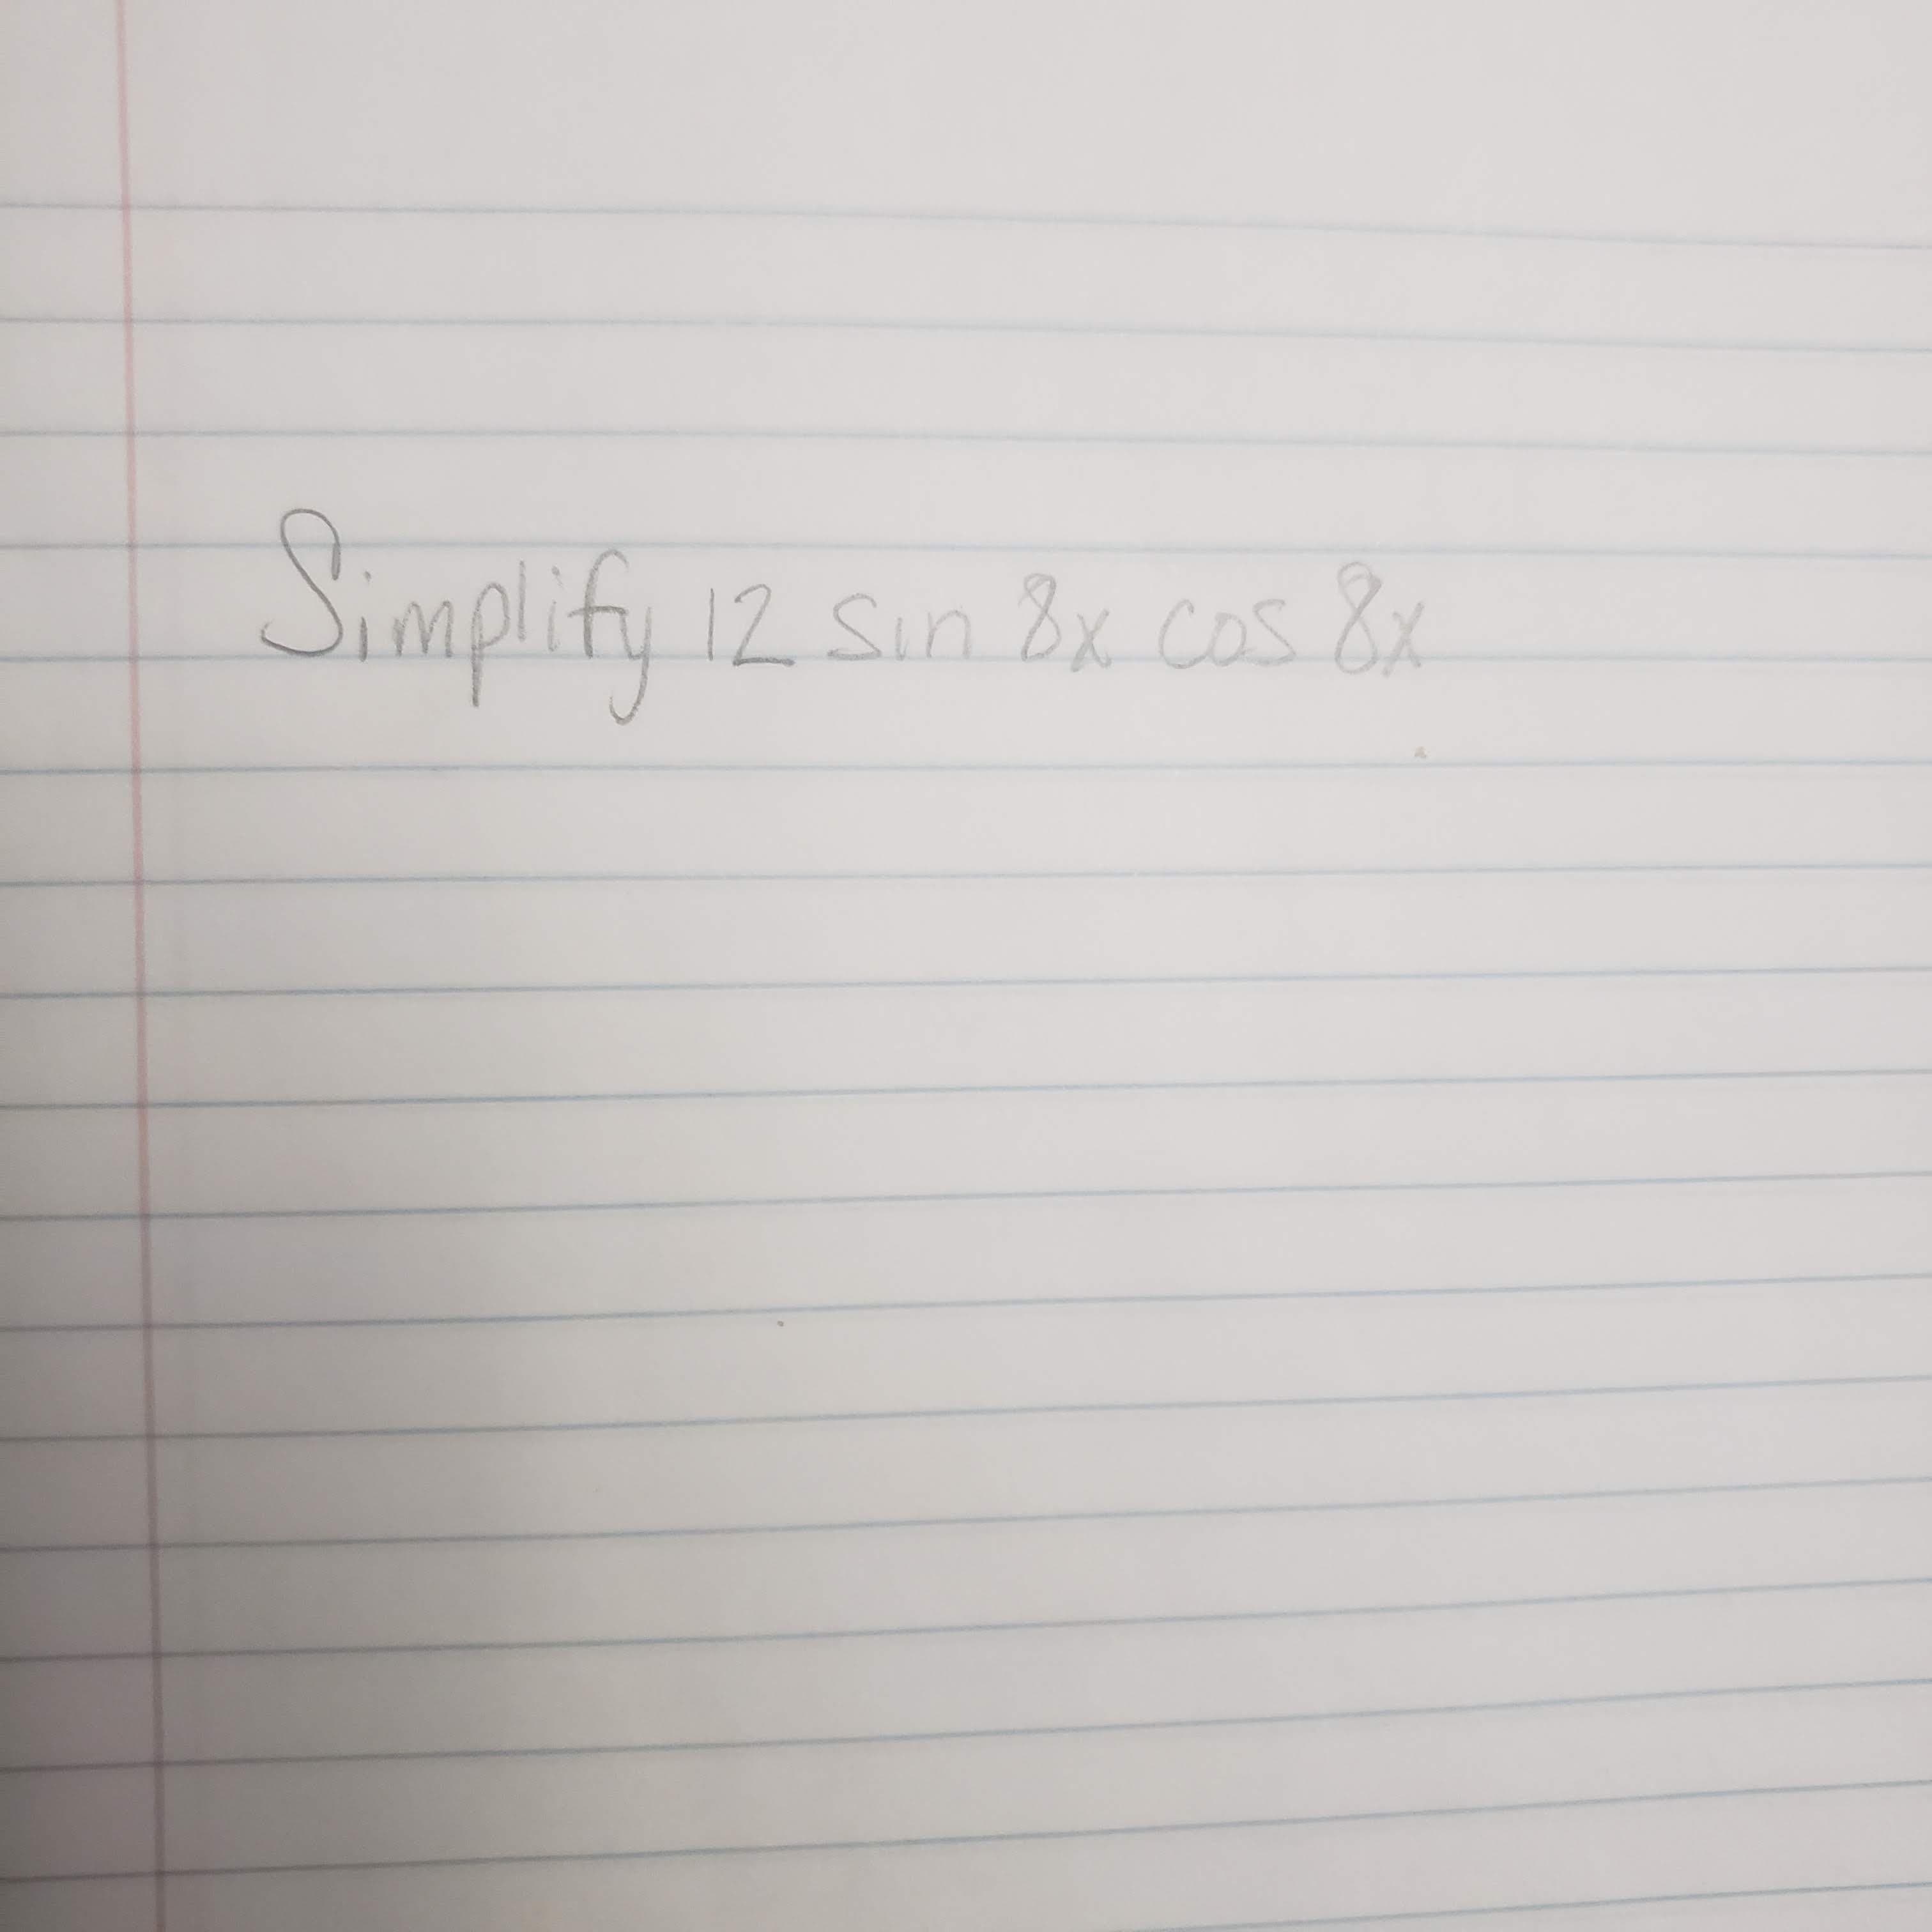 Simplify 12 Sin Bx cos &x
